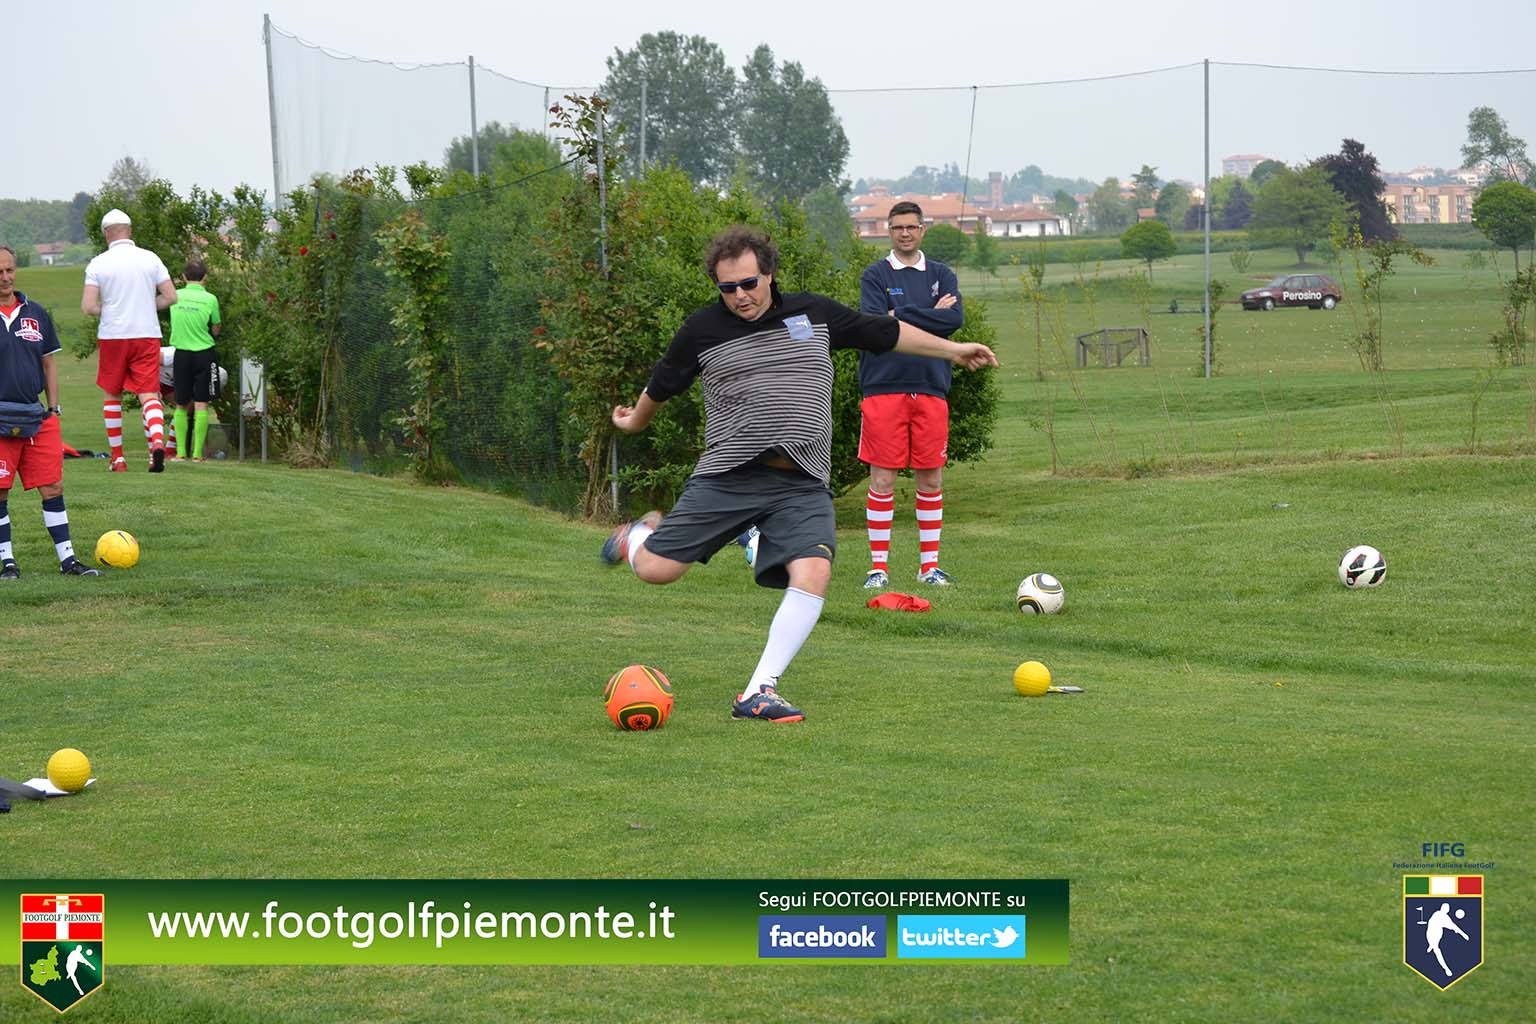 FOTO 9 Regions’ Cup Footgolf Piemonte 2016 Golf Città di Asti (At) 30apr16-7